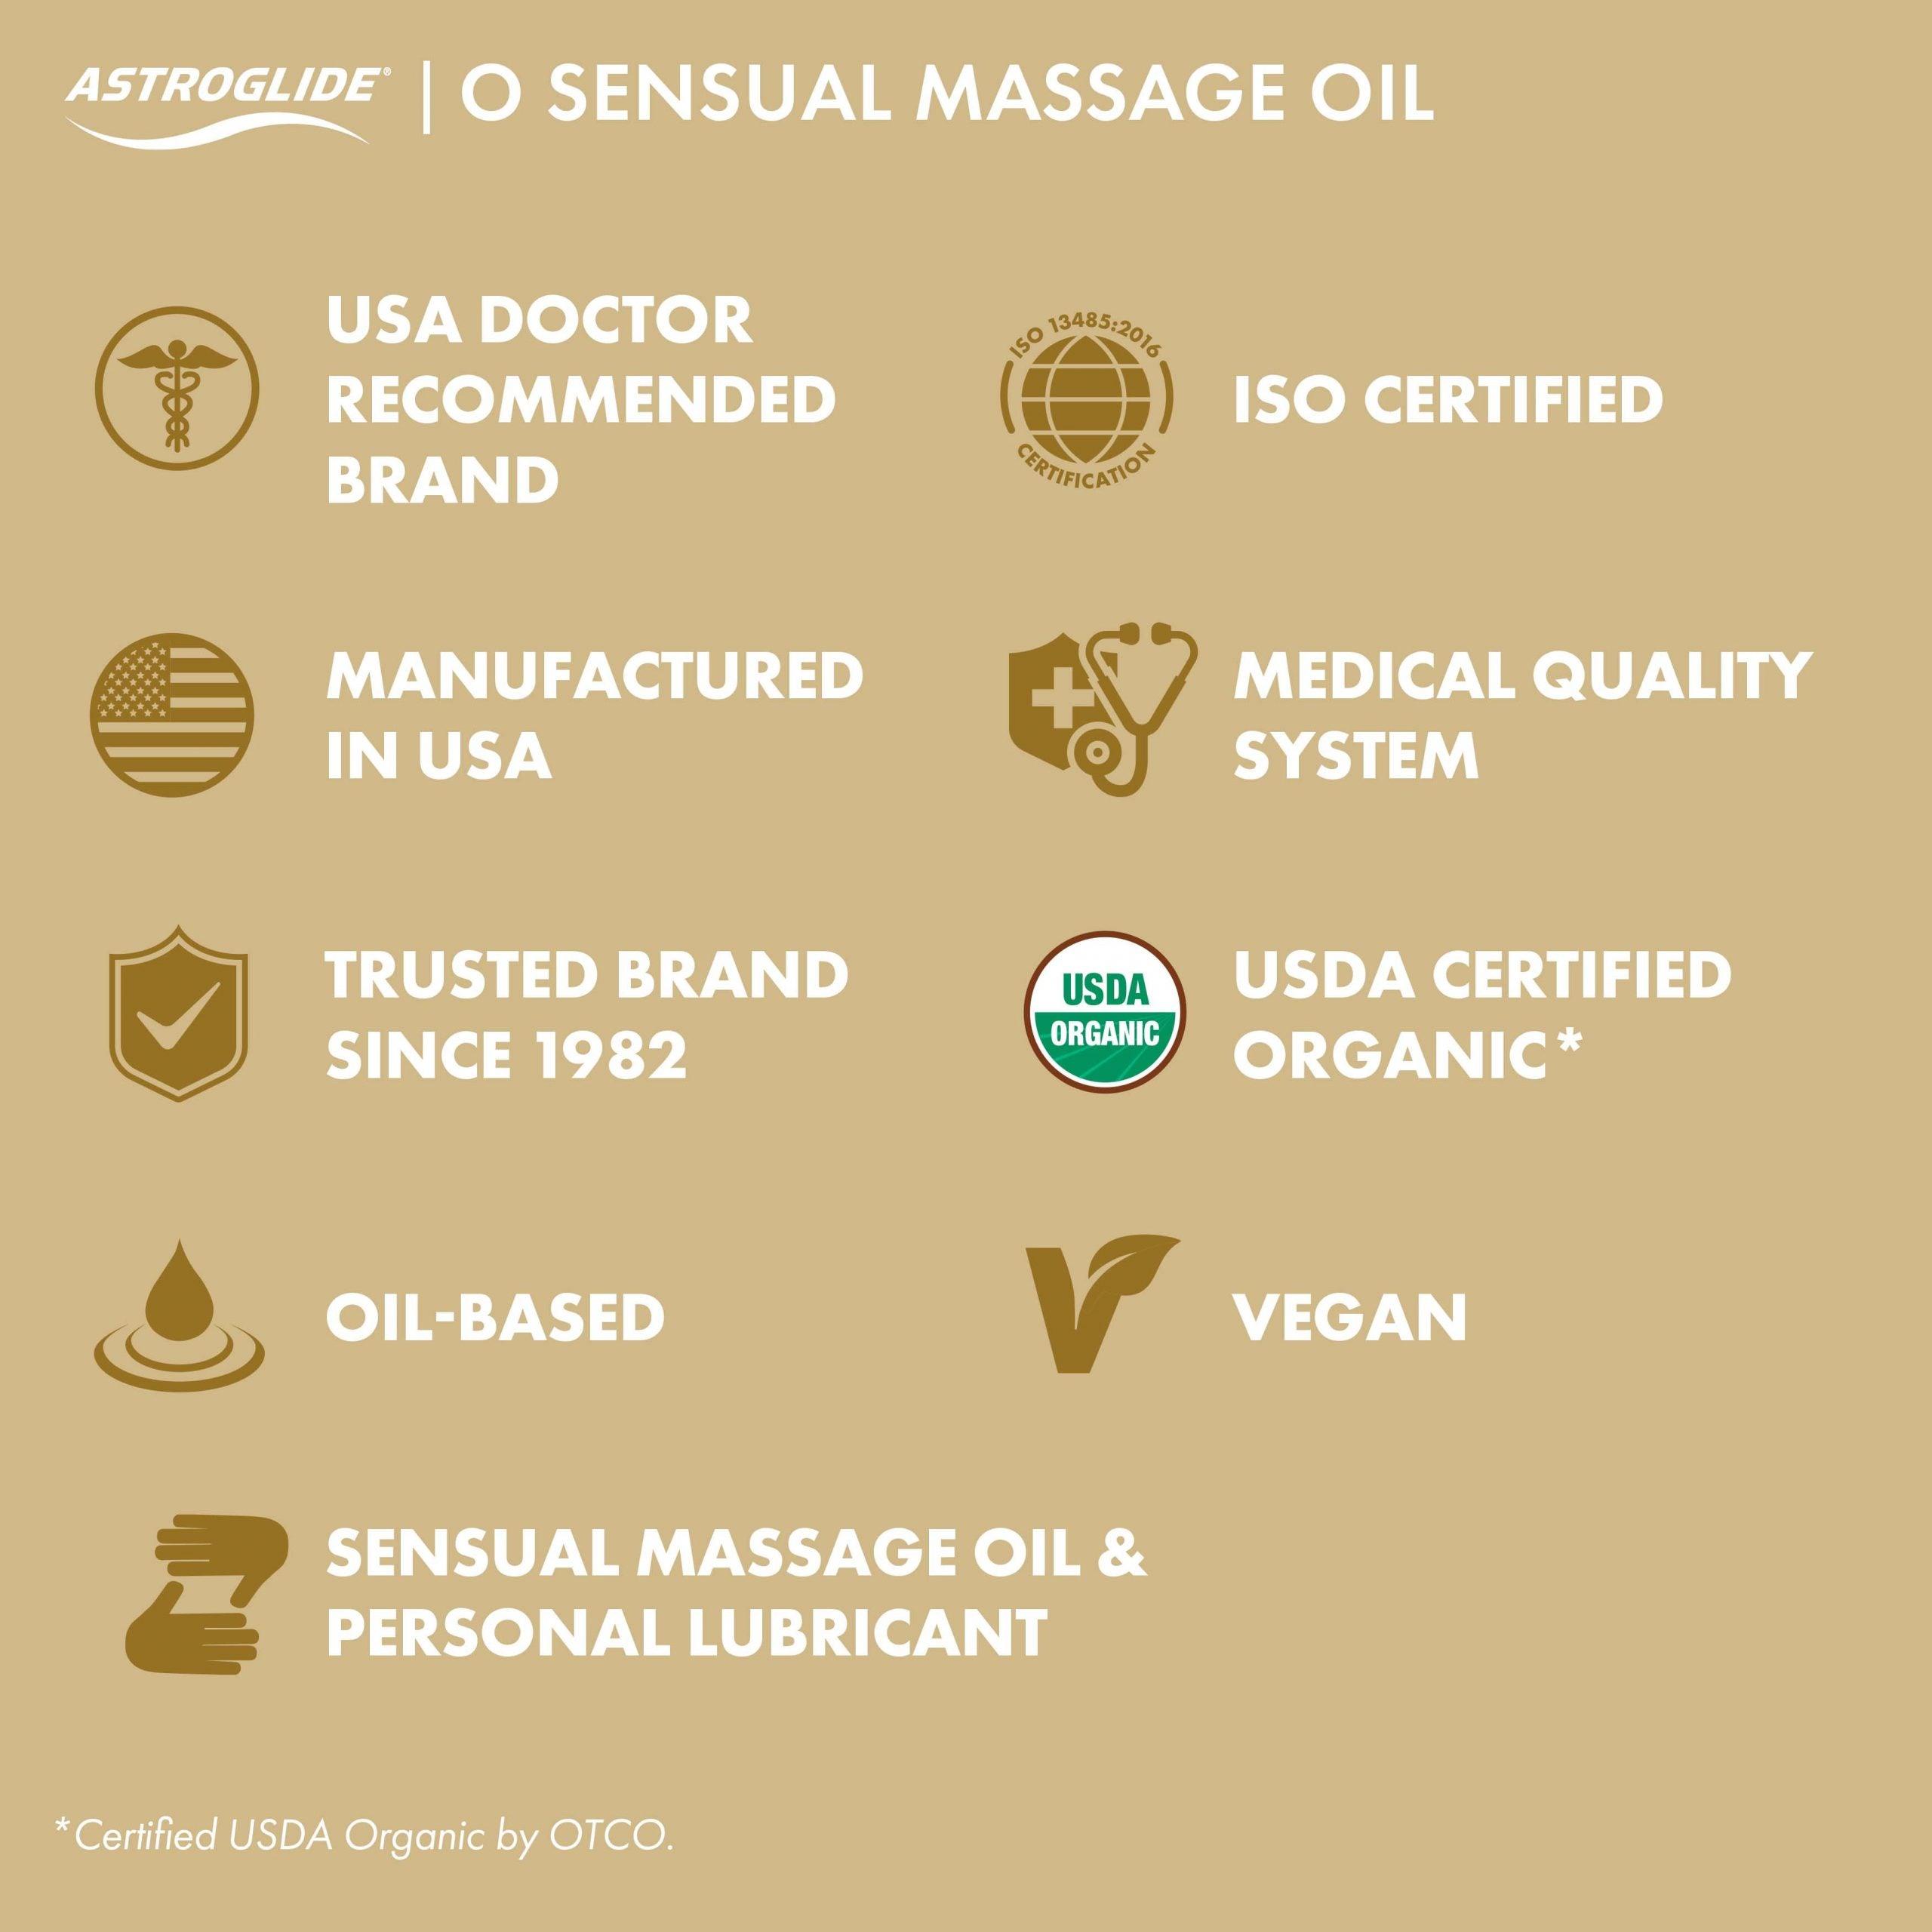 Astroglide O Oil • Massage Lotion + Lubricant - Happibee